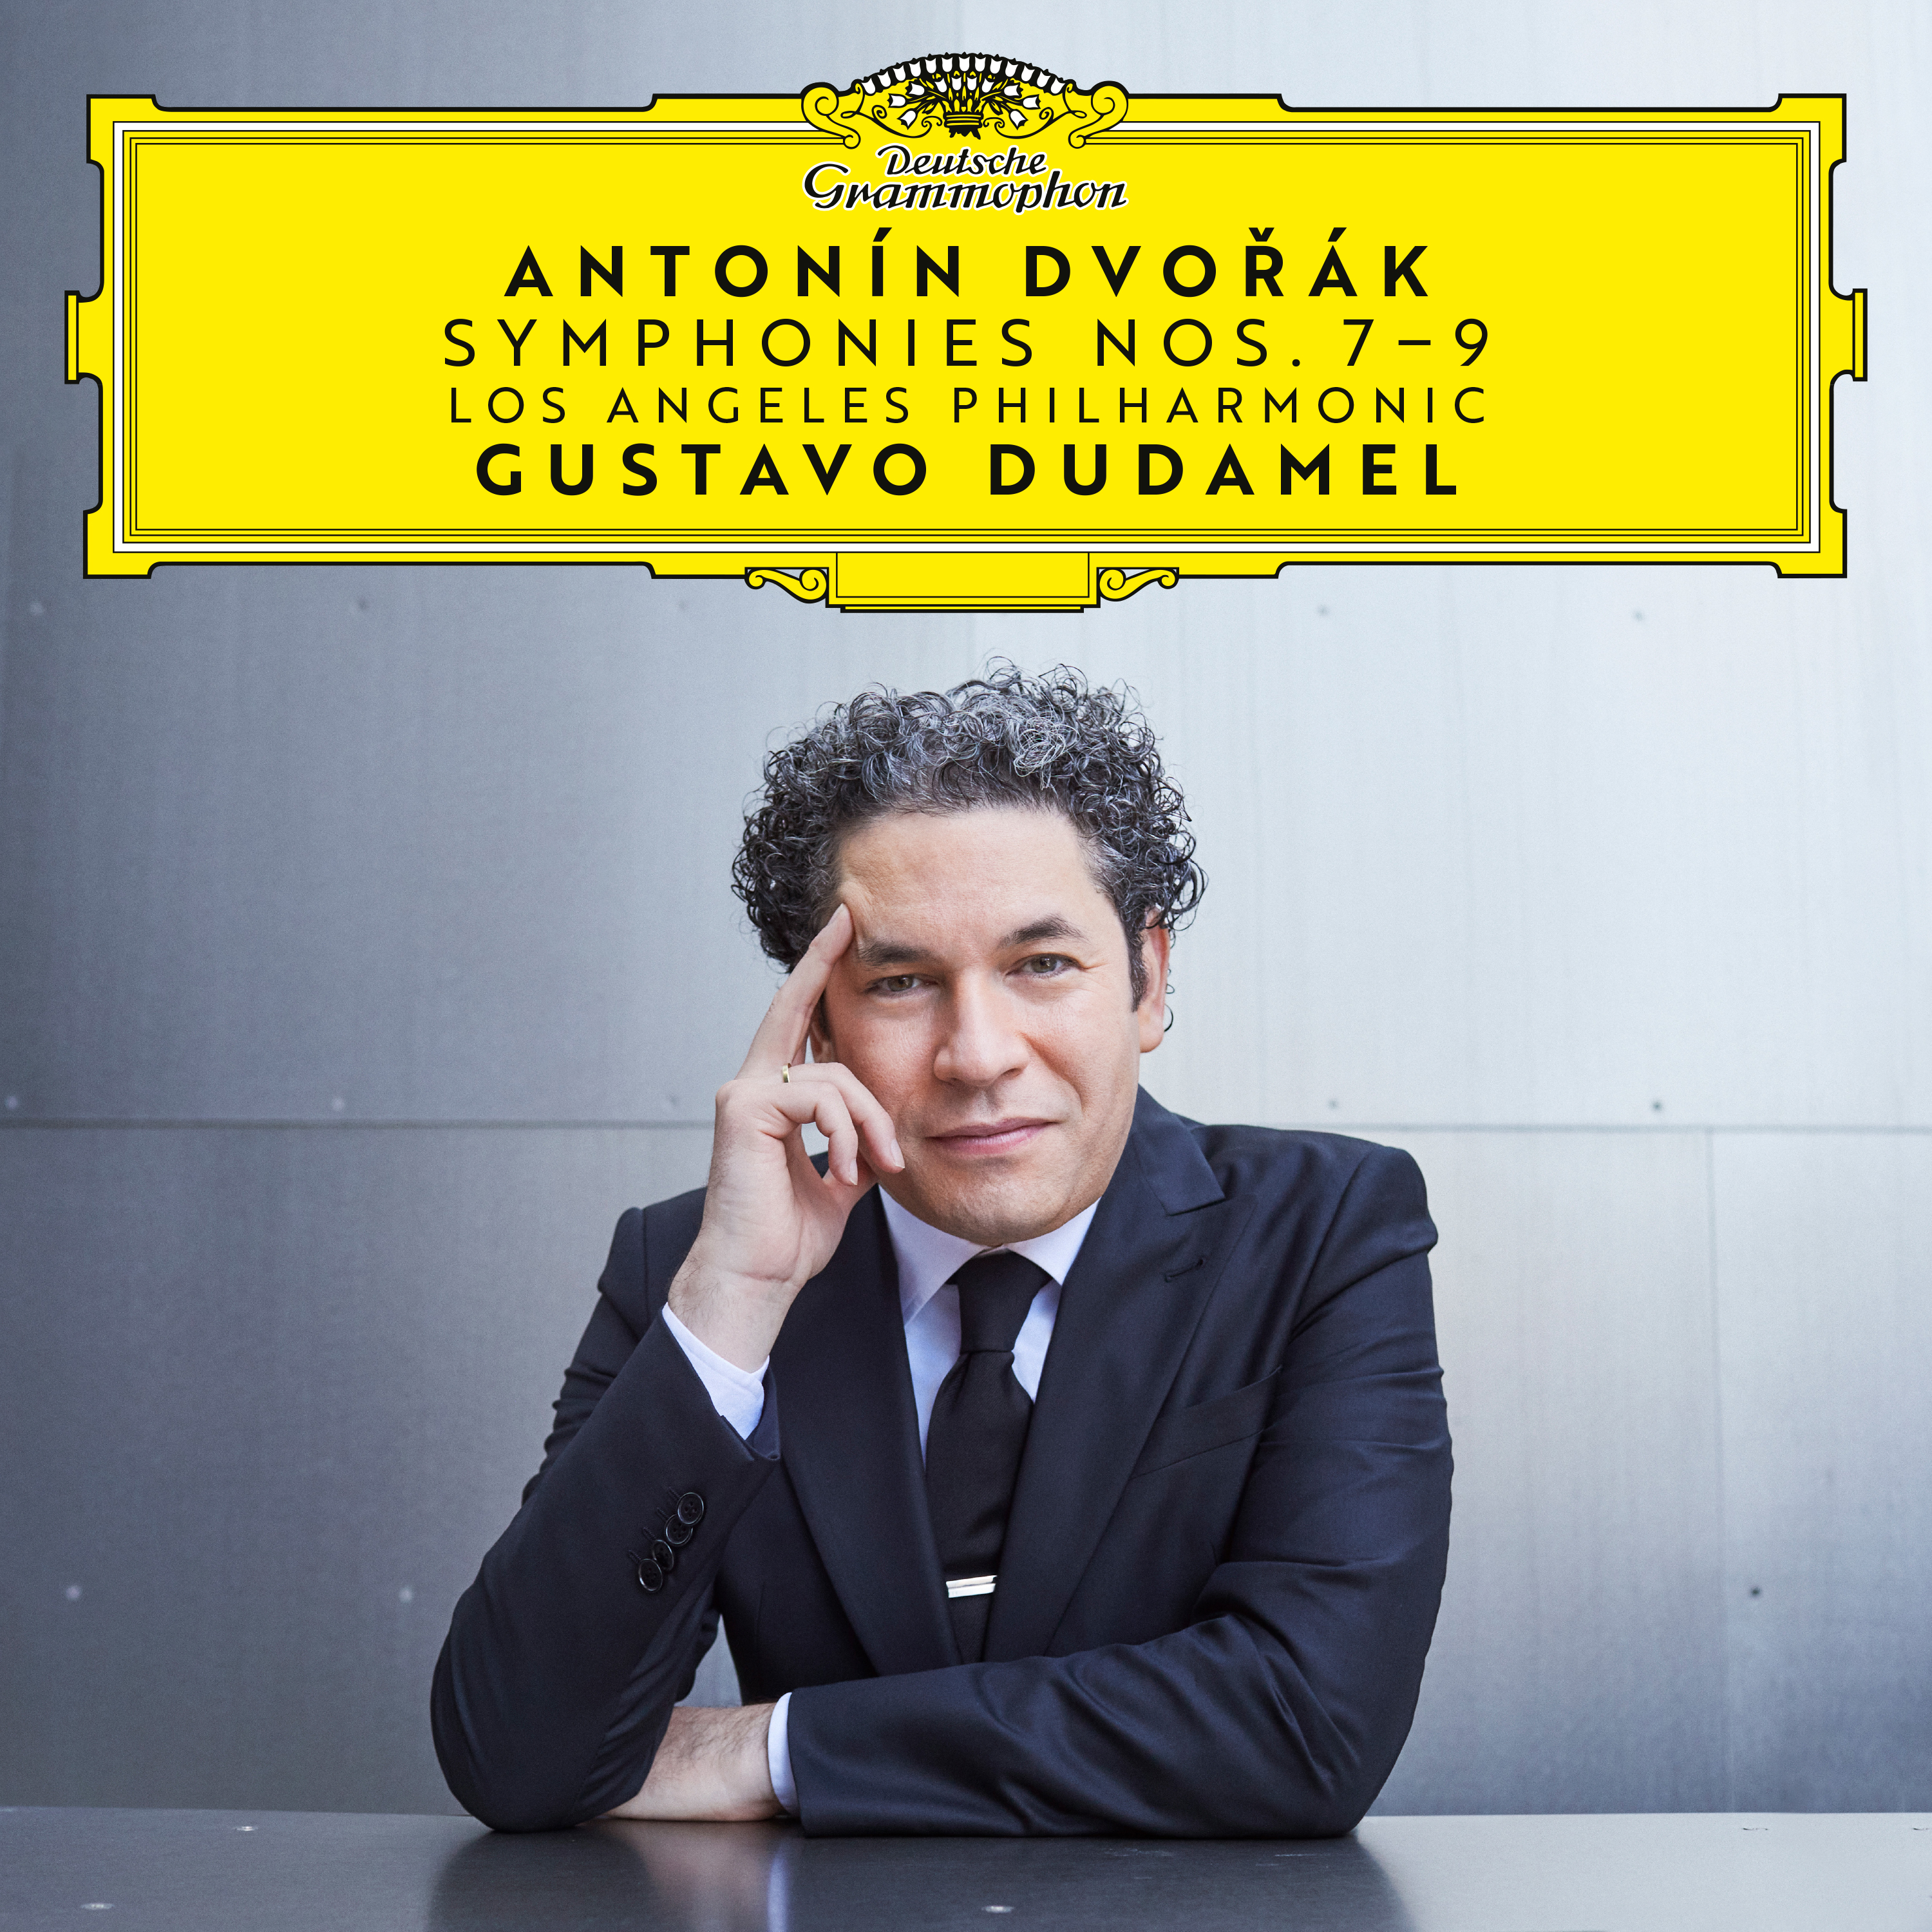 Product Family  DVOŘÁK Symphonies Nos. 7 - 9 / Dudamel